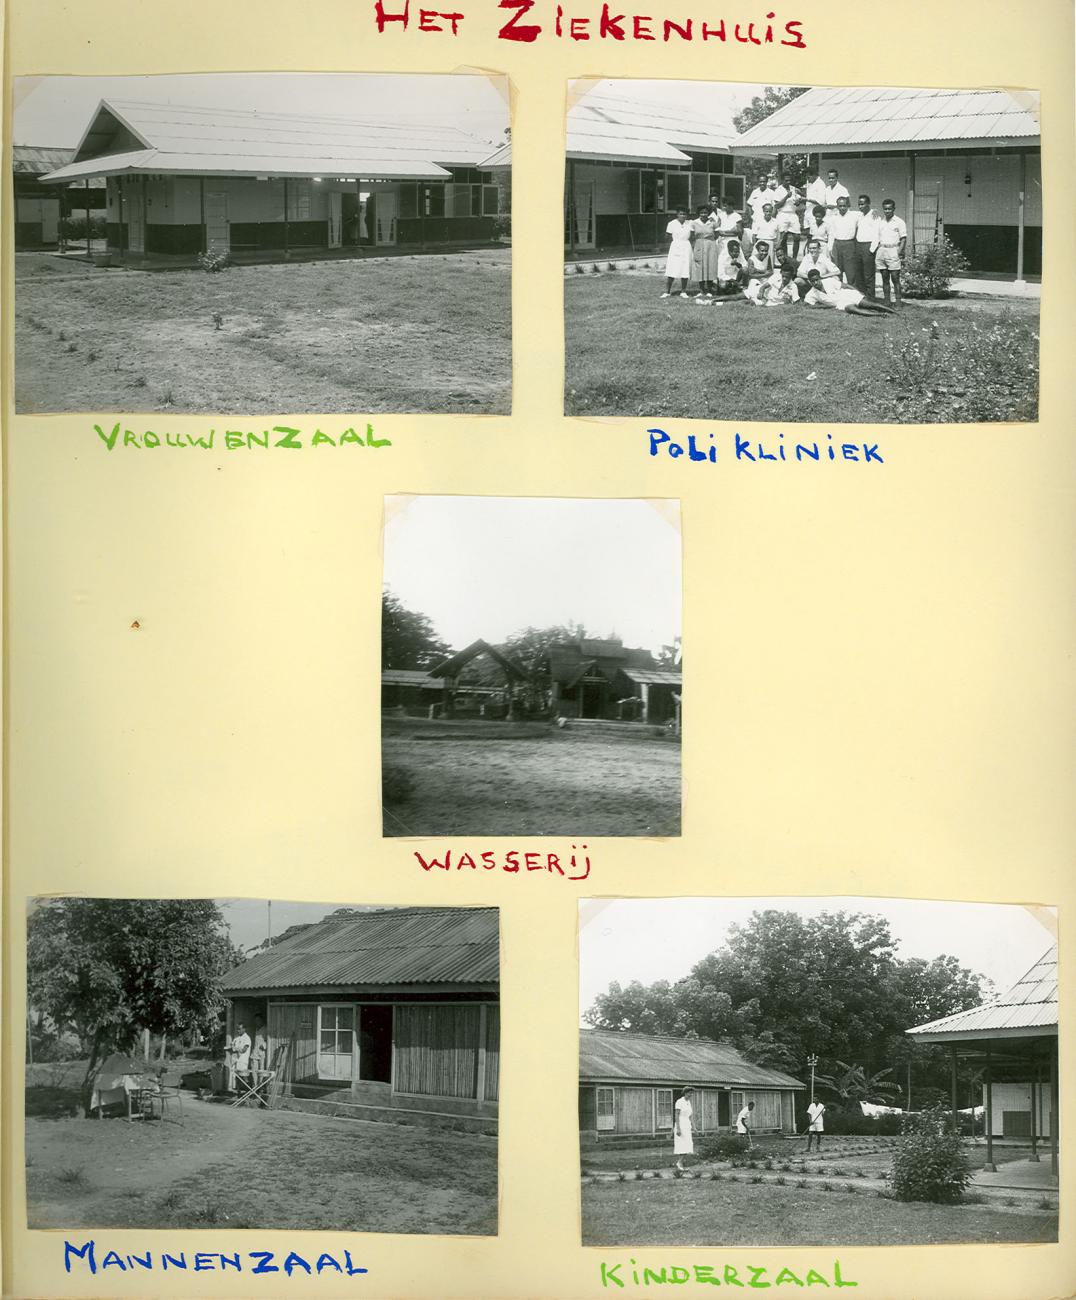 BD/83/7 - 
Several buildings of the sarmi hospital
